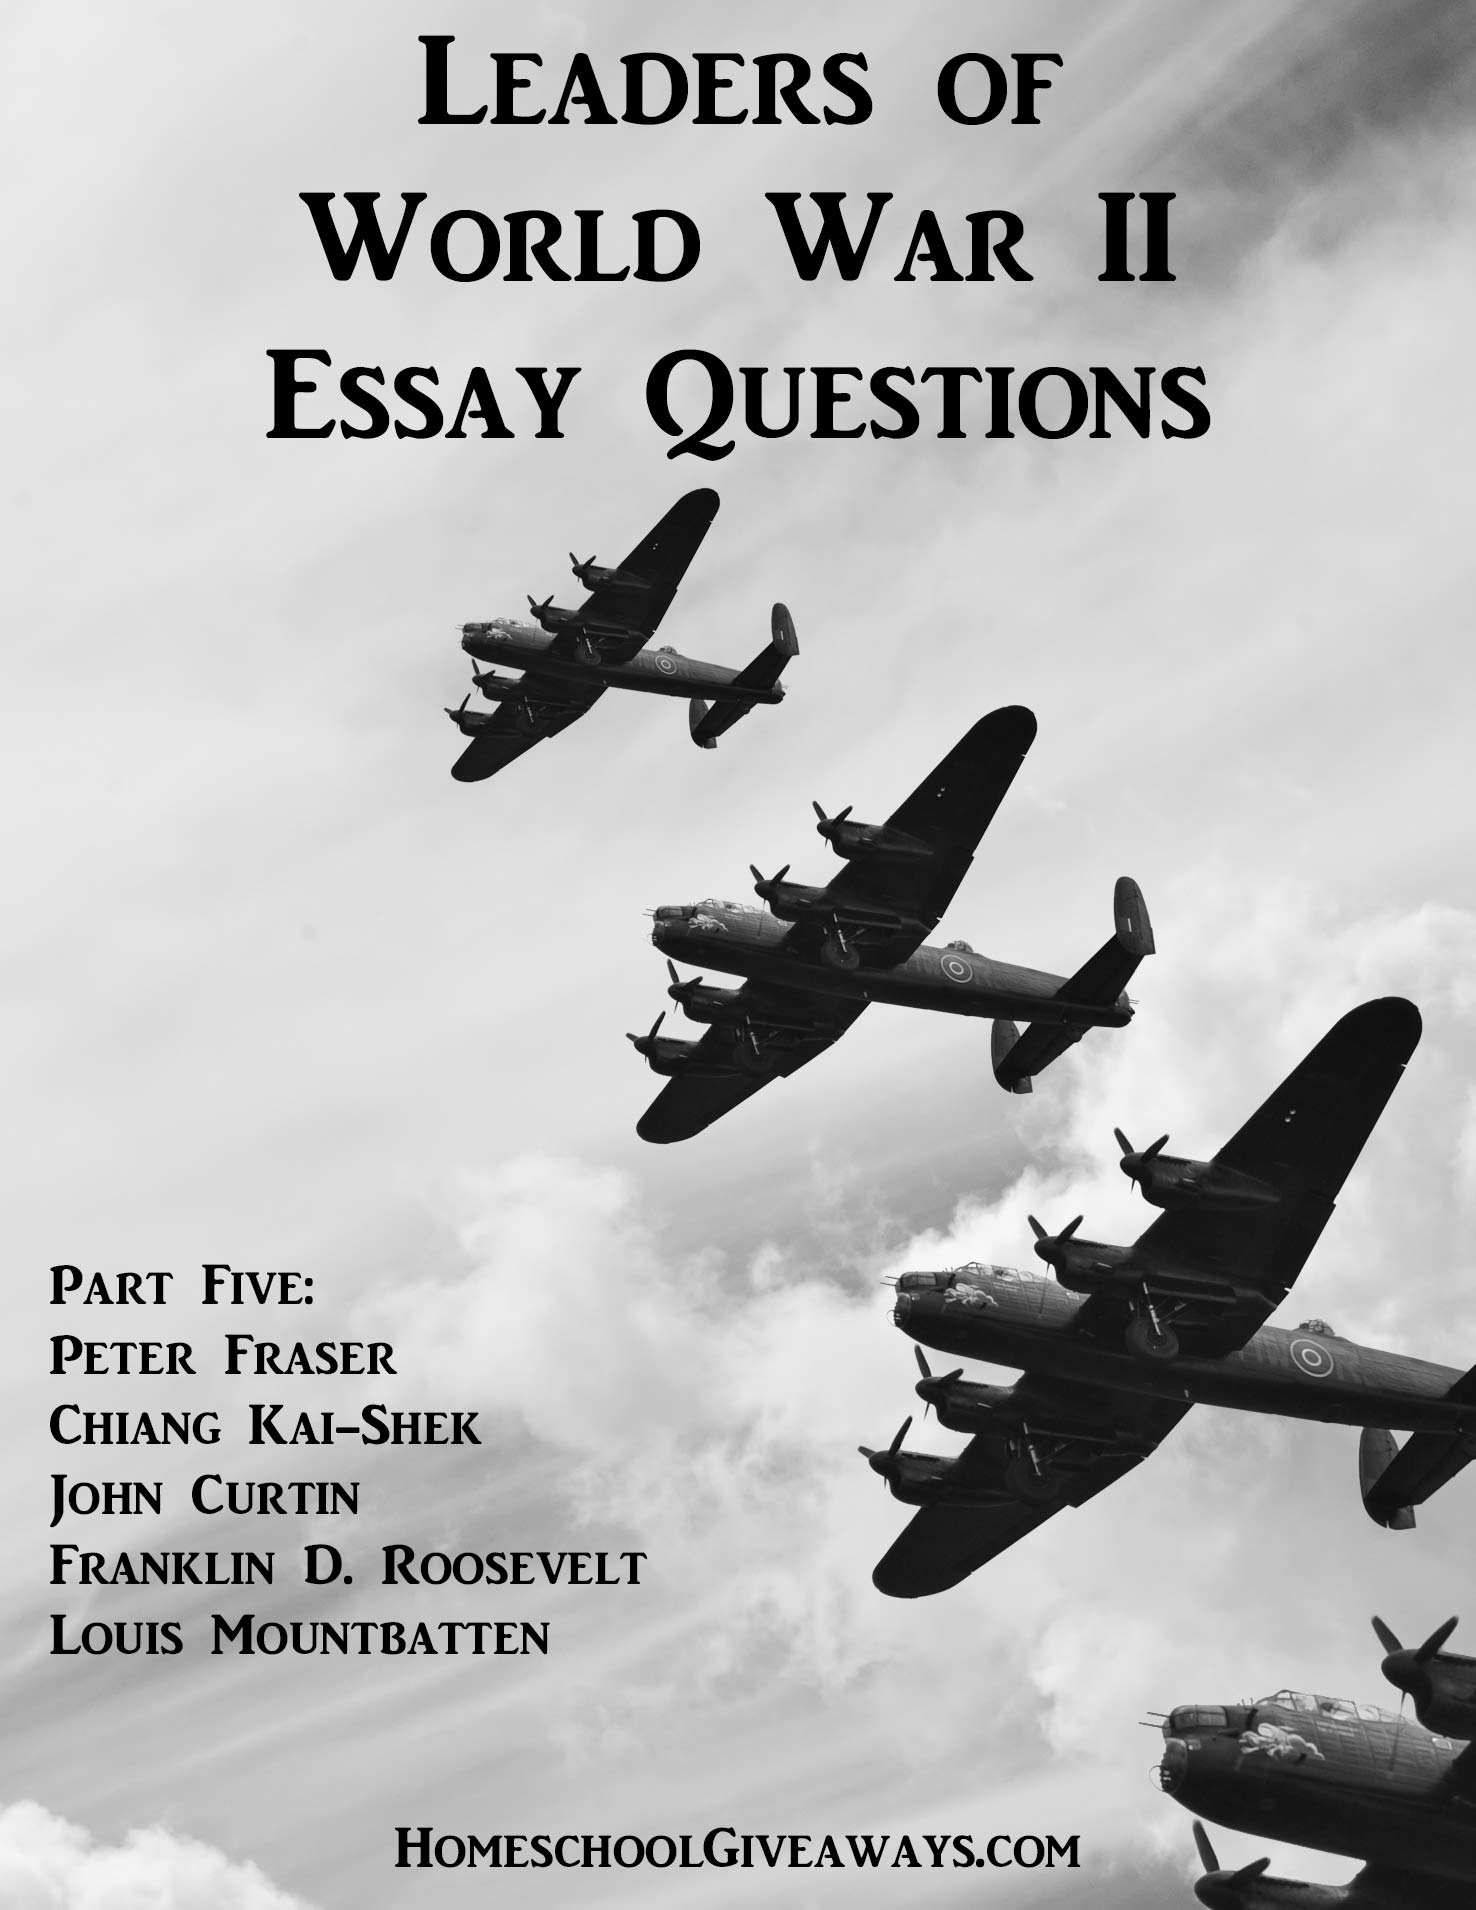 Leaders of World War II Essay Questions, Part Five